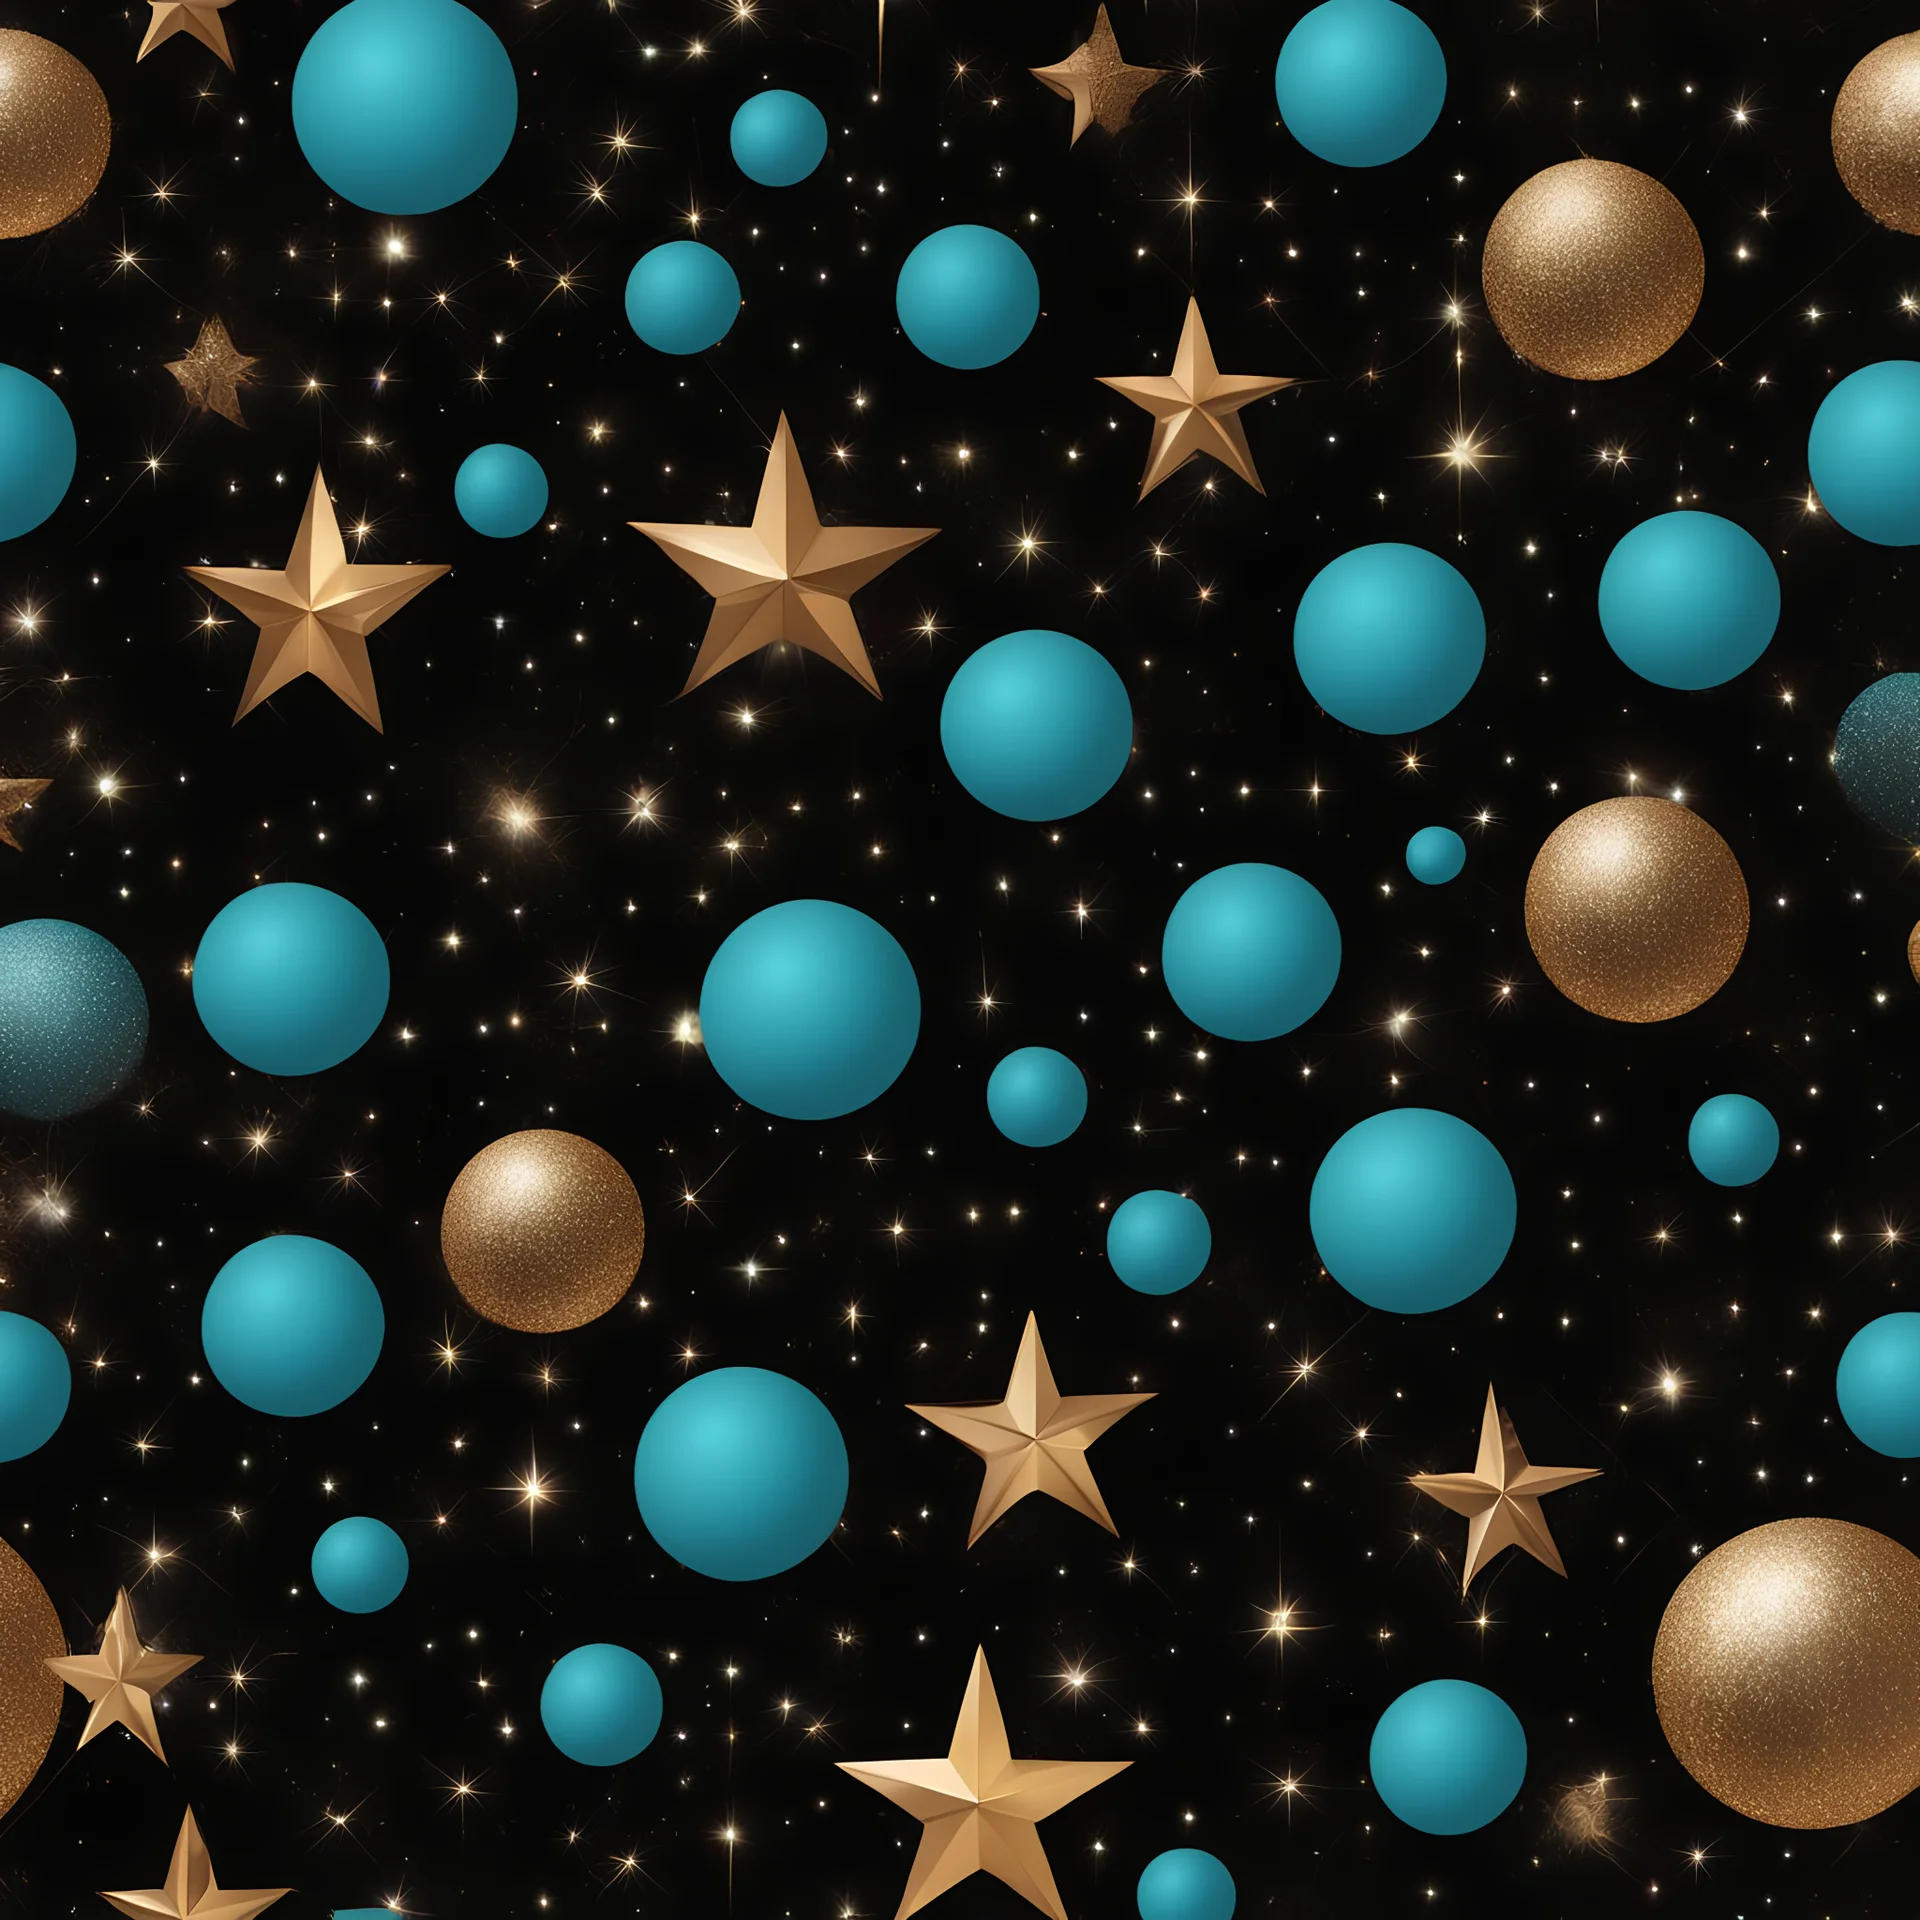 Fata fantastica mondo virtuale cosmico BACKGROUND doré, étoiles brillantes, sphères turquoises,